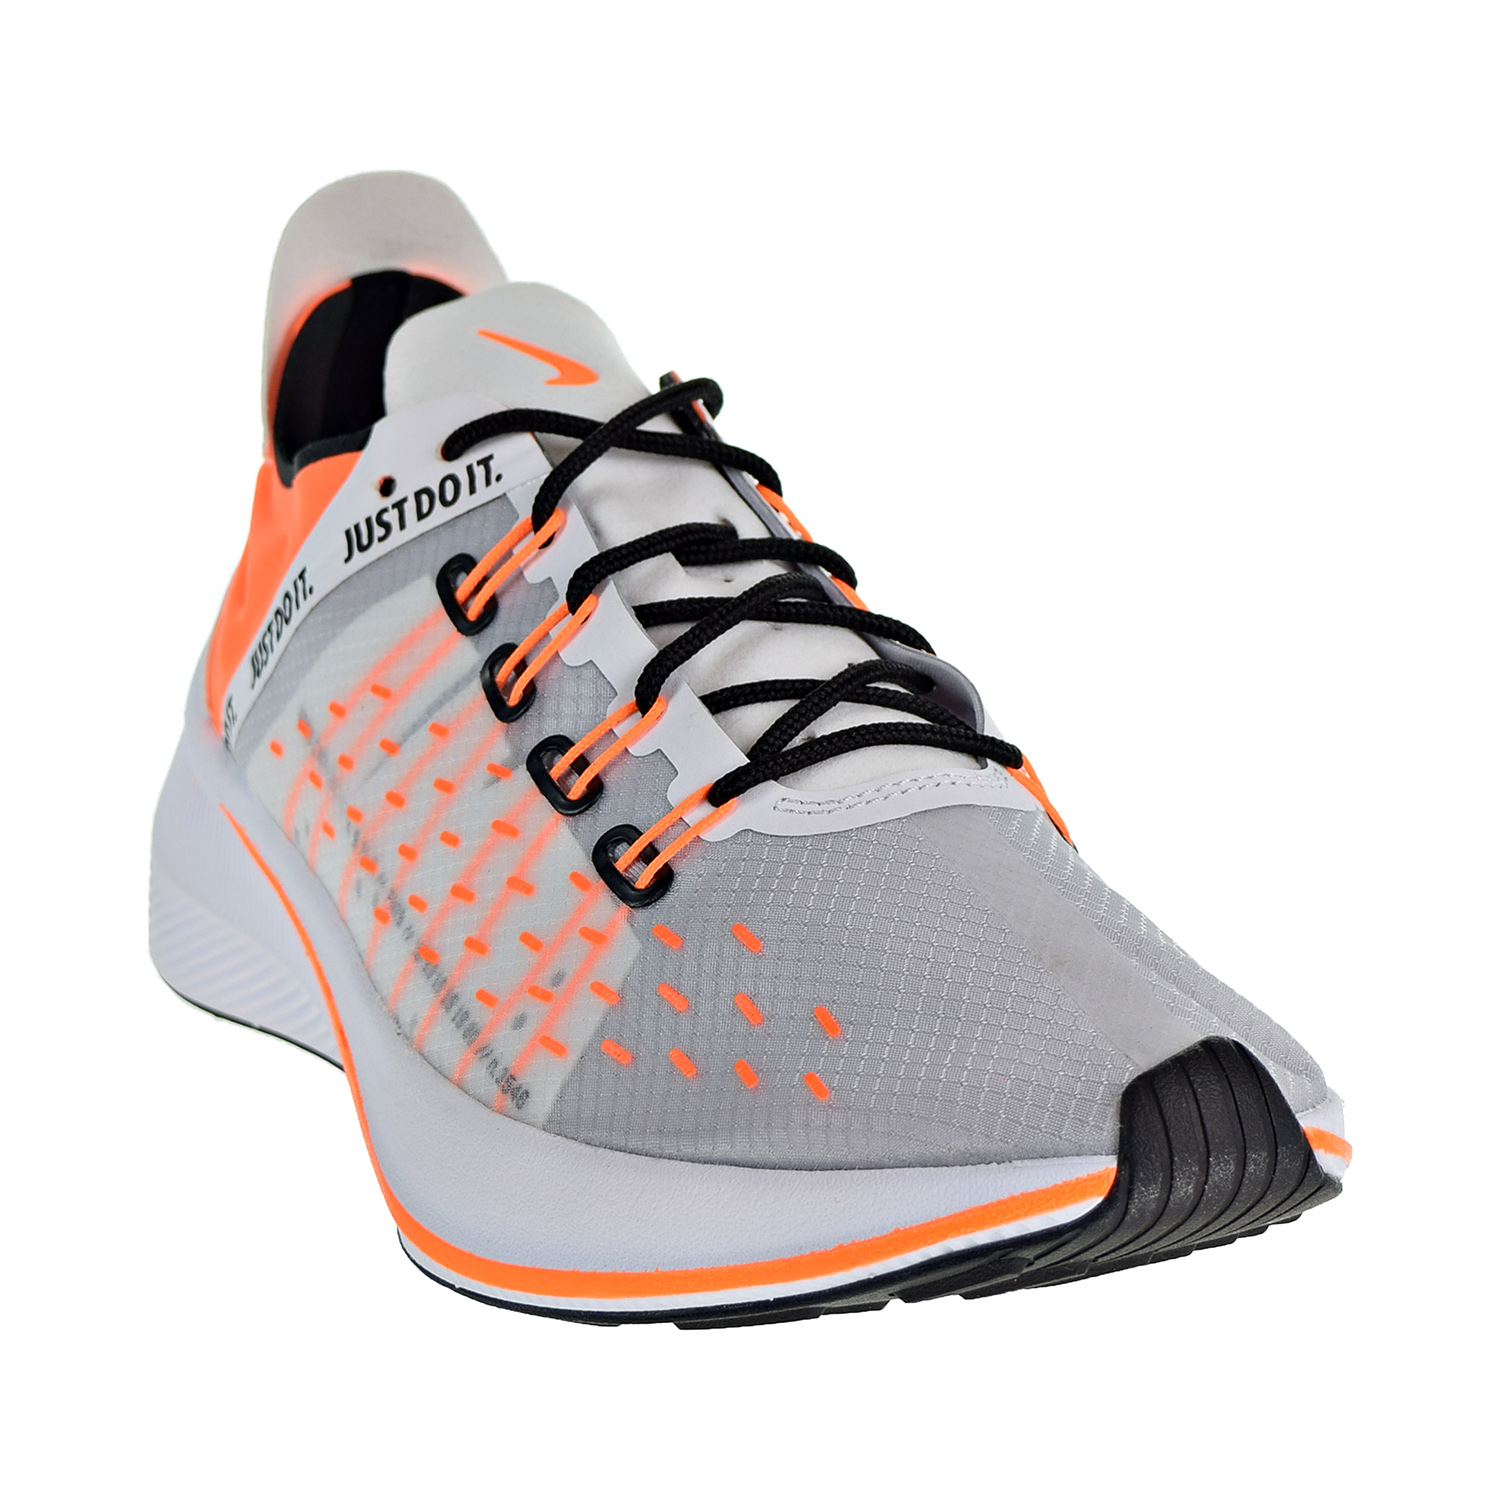 Nike EXP-X14 SE "Just Do It" Men's Shoes White/Total Orange/Black Wolf ao3095-100 - image 2 of 6